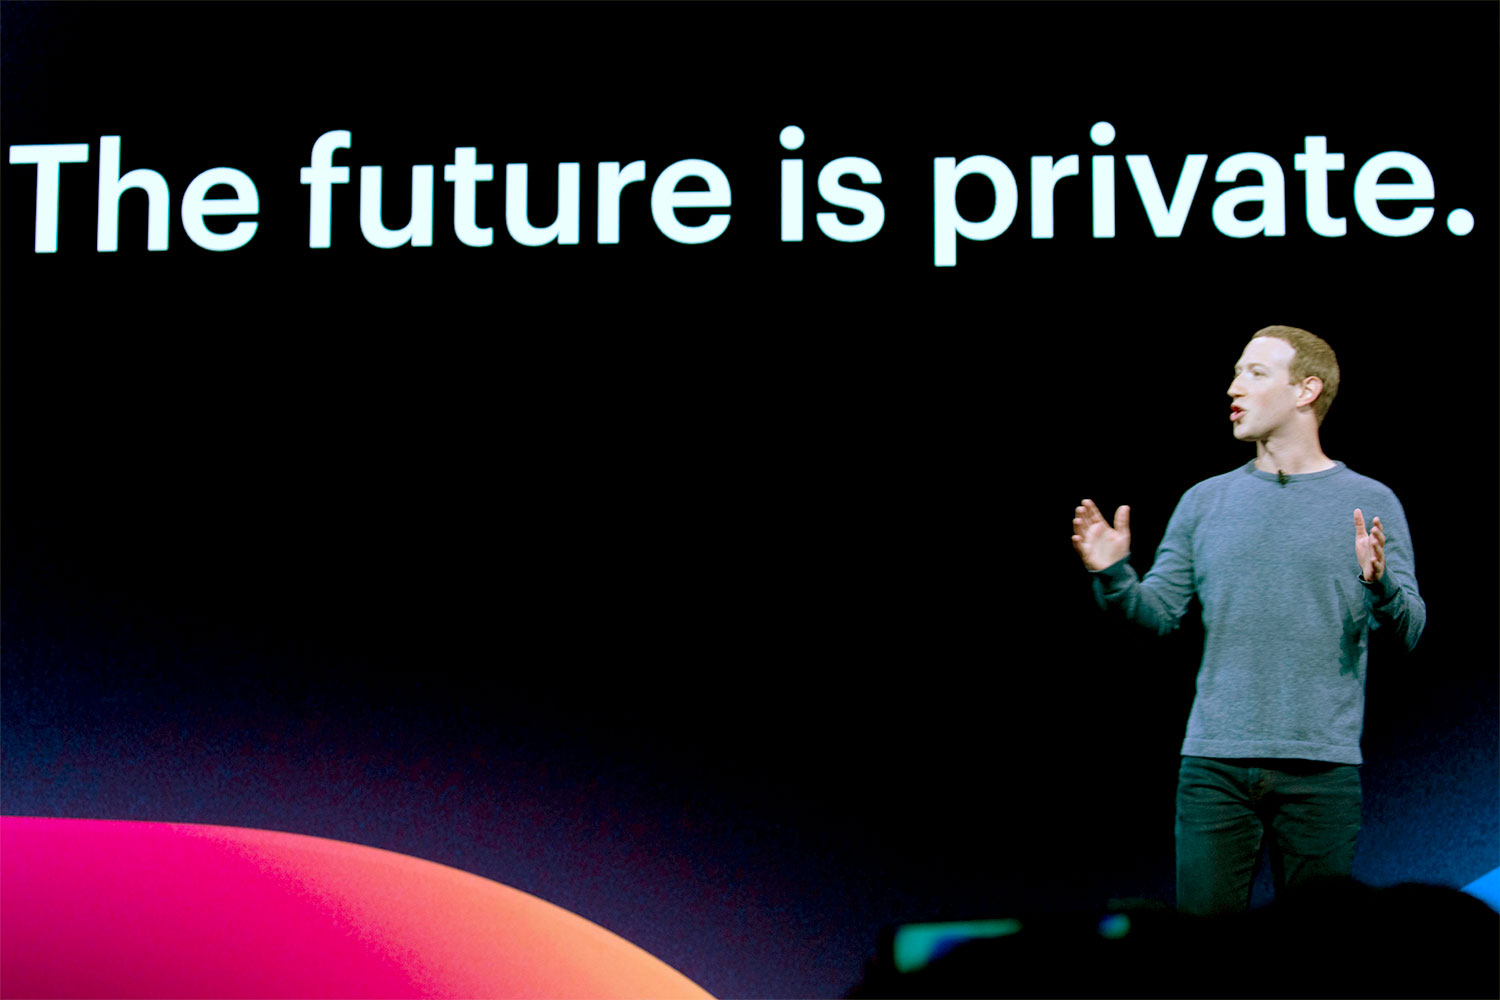 Na Conferência de Desenvolvedores de 2019, Mark Zuckerberg anunciava que “o futuro é privado” - Foto: Anthony Quintano/Creative Commons IA